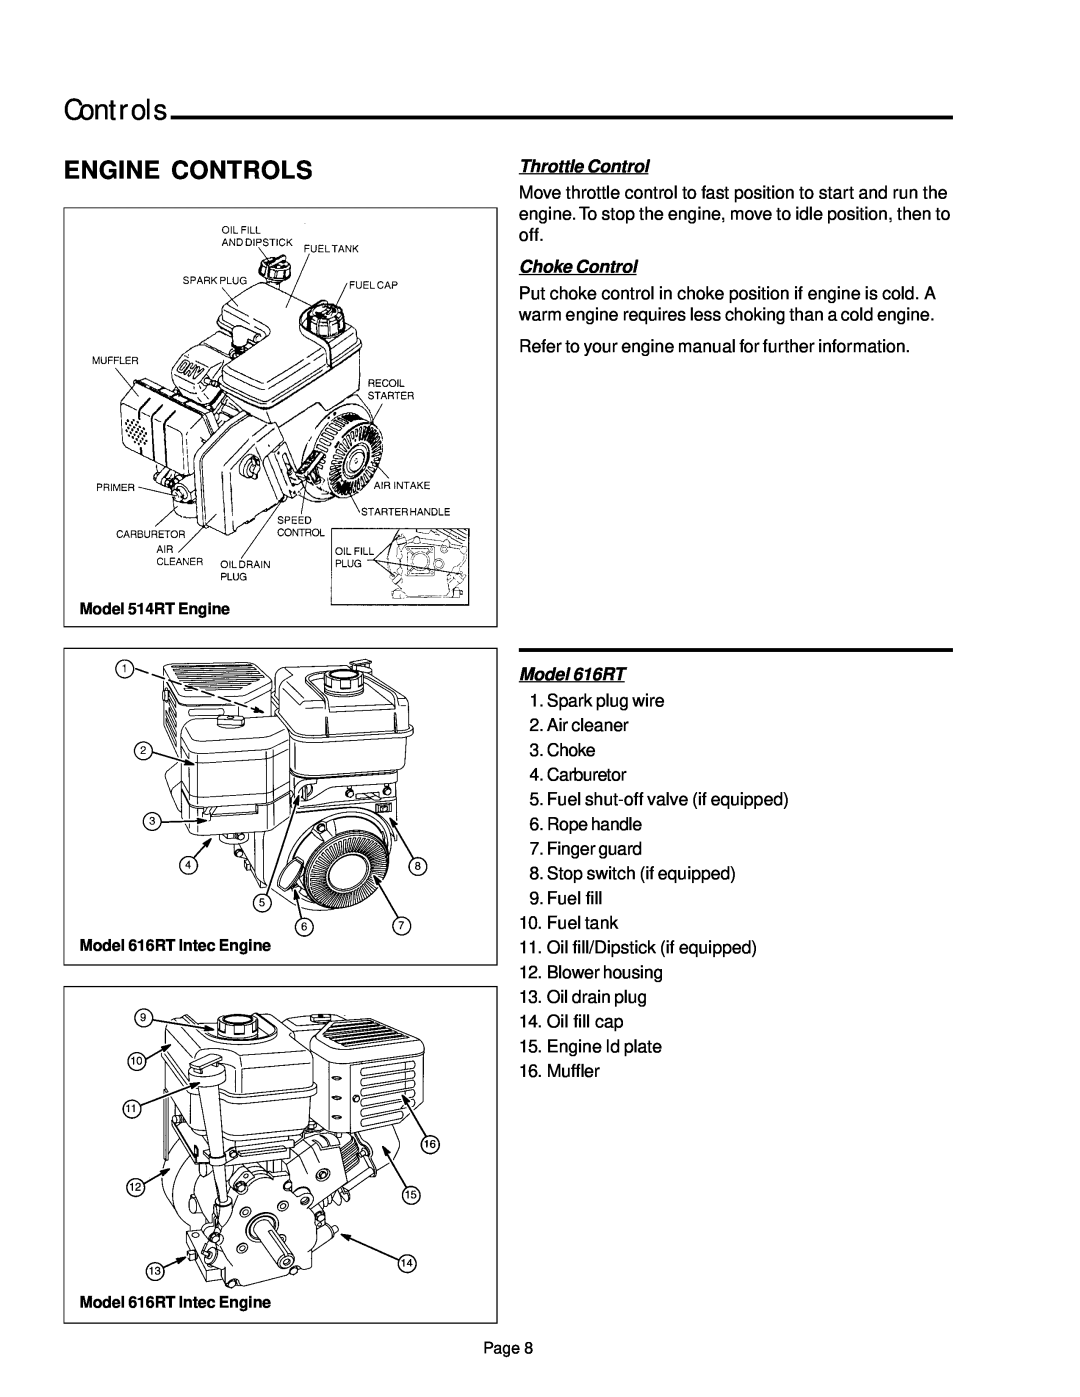 Simplicity 1693705, 1693704, 1693207 manual Engine Controls, Throttle Control, Choke Control, Model 616RT 